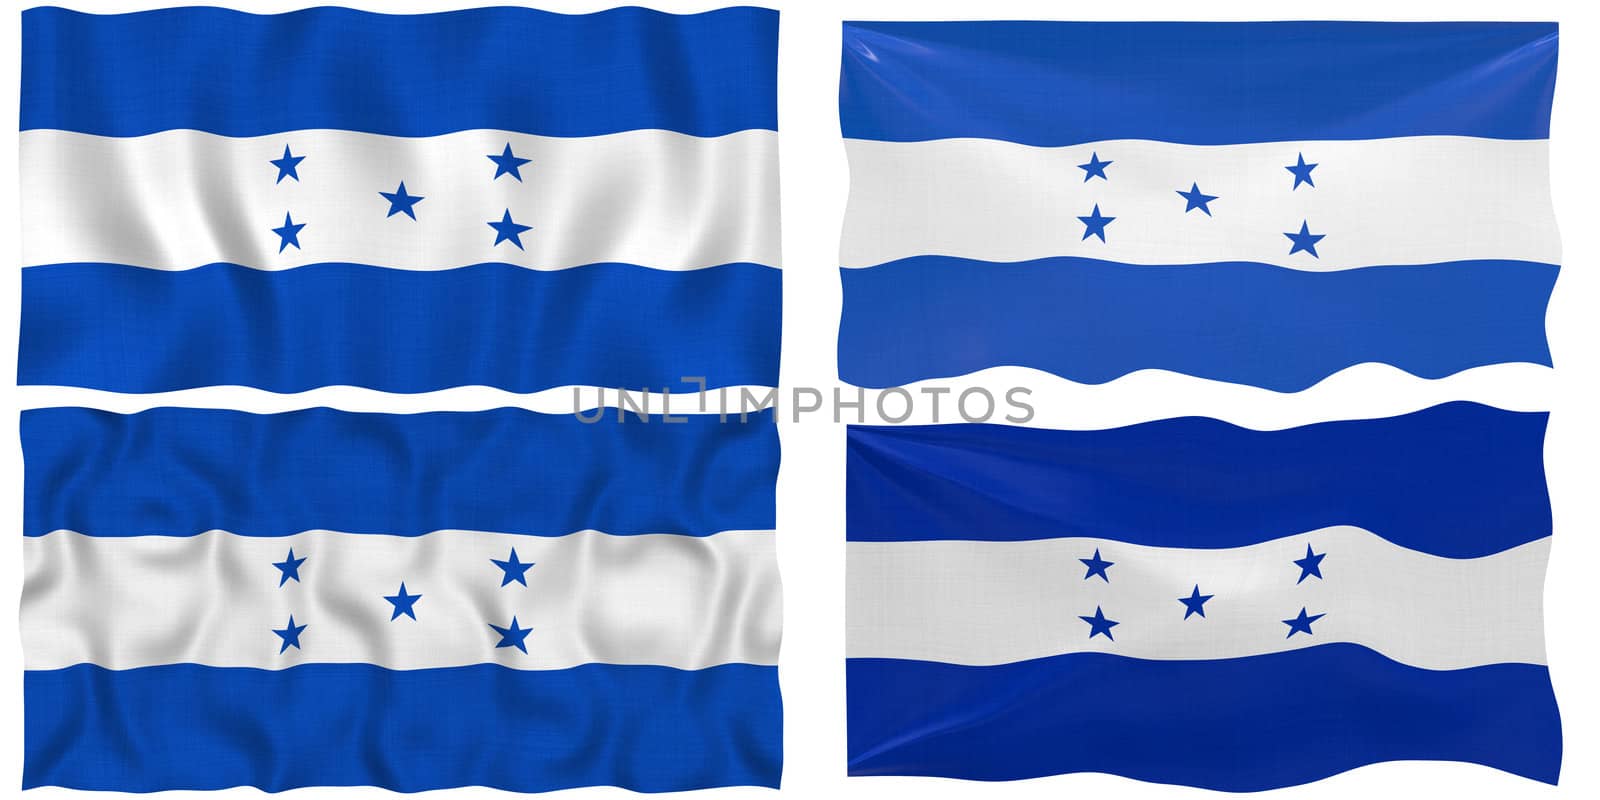 Flag of Honduras by clearviewstock